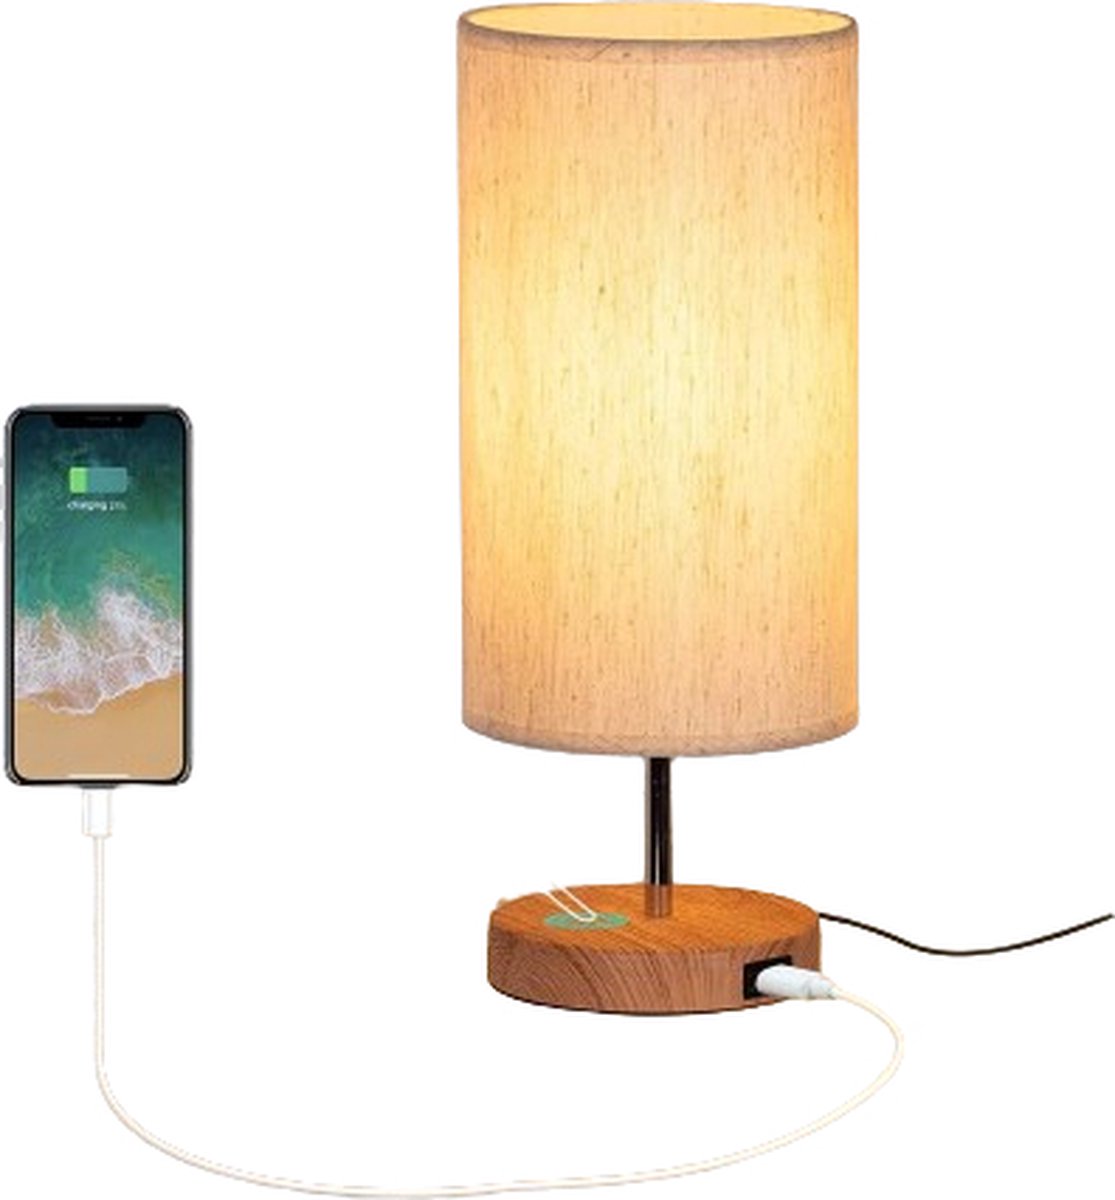 D&B Lamp - Tafellamp - Nachtkast Lamp - Aanraakbediening - 3 kleuren - Dimbaar - Met USB - Oplaadpoort - Bureaulamp - E27 - Tafellamp Slaapkamer - Kantoor